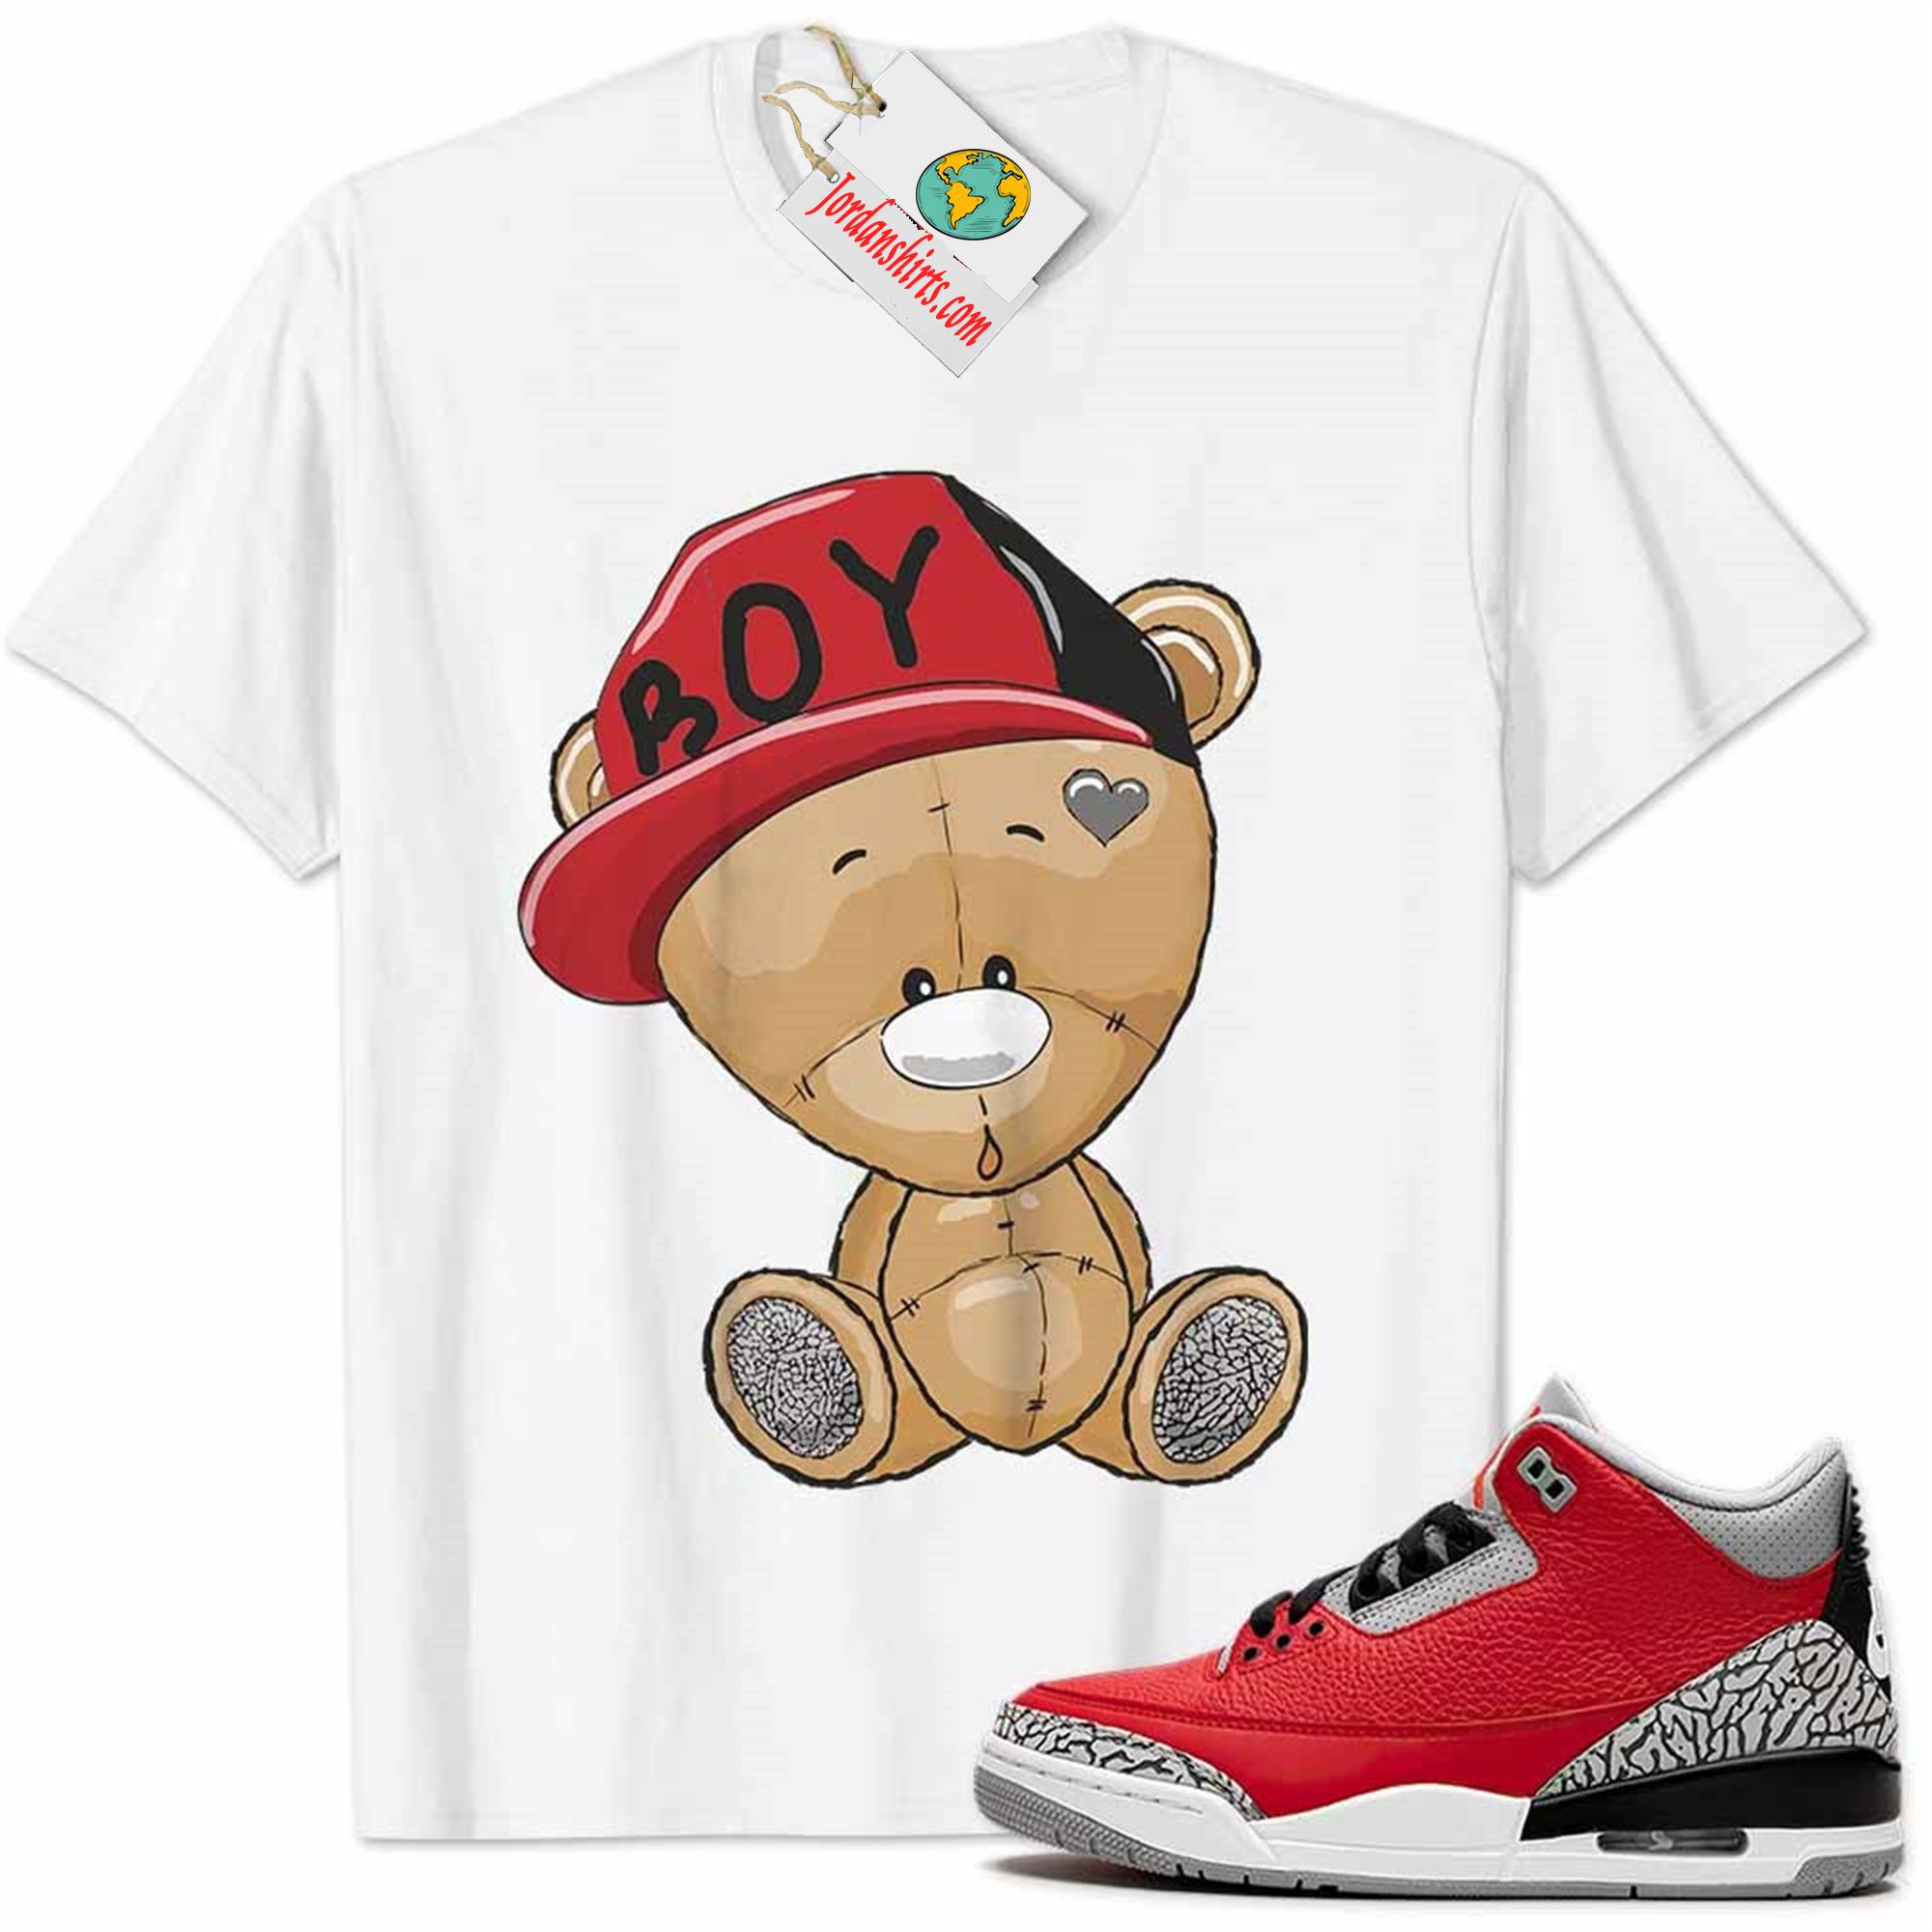 Jordan 3 Shirt, Jordan 3 Cement Shirt Cute Baby Teddy Bear White Size Up To 5xl